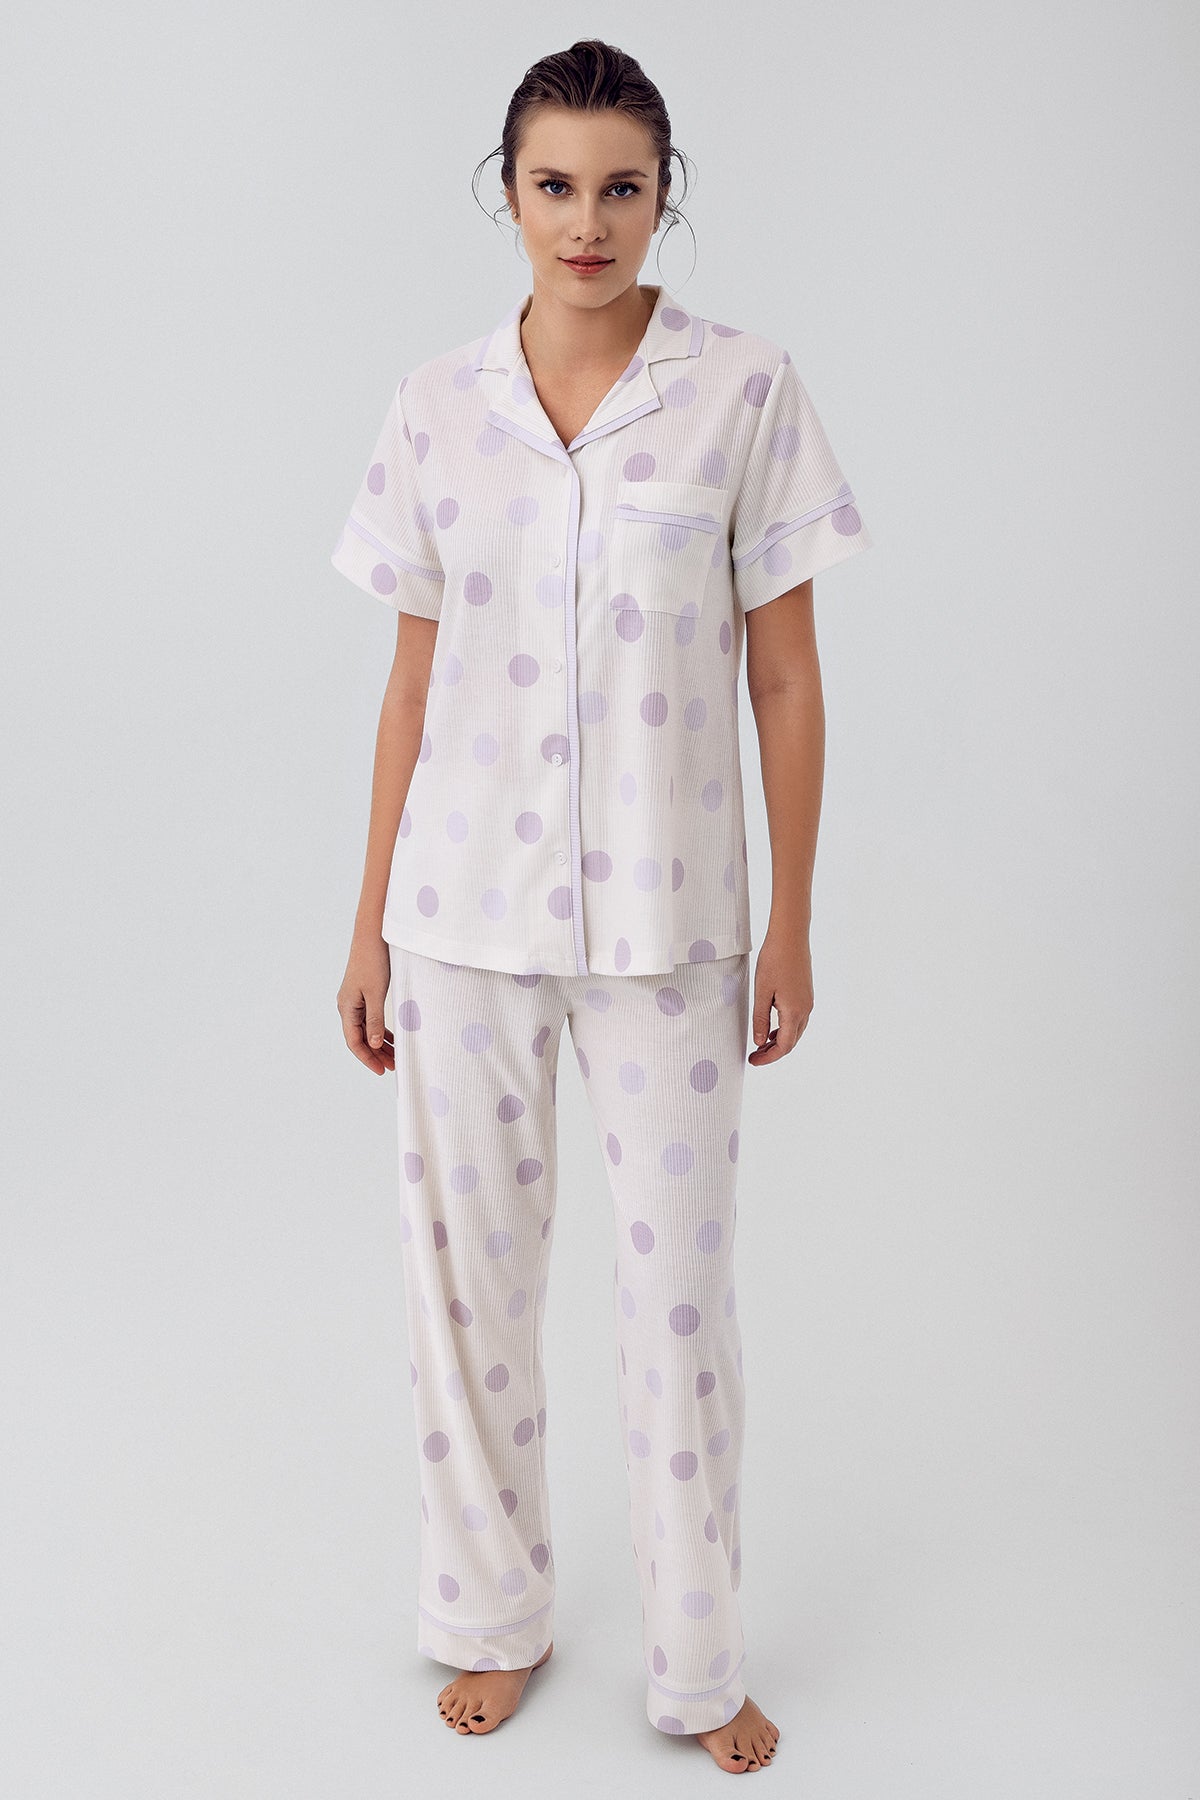 Polka Dot 3-Pieces Maternity & Nursing Pajamas With Robe Lilac - 16310